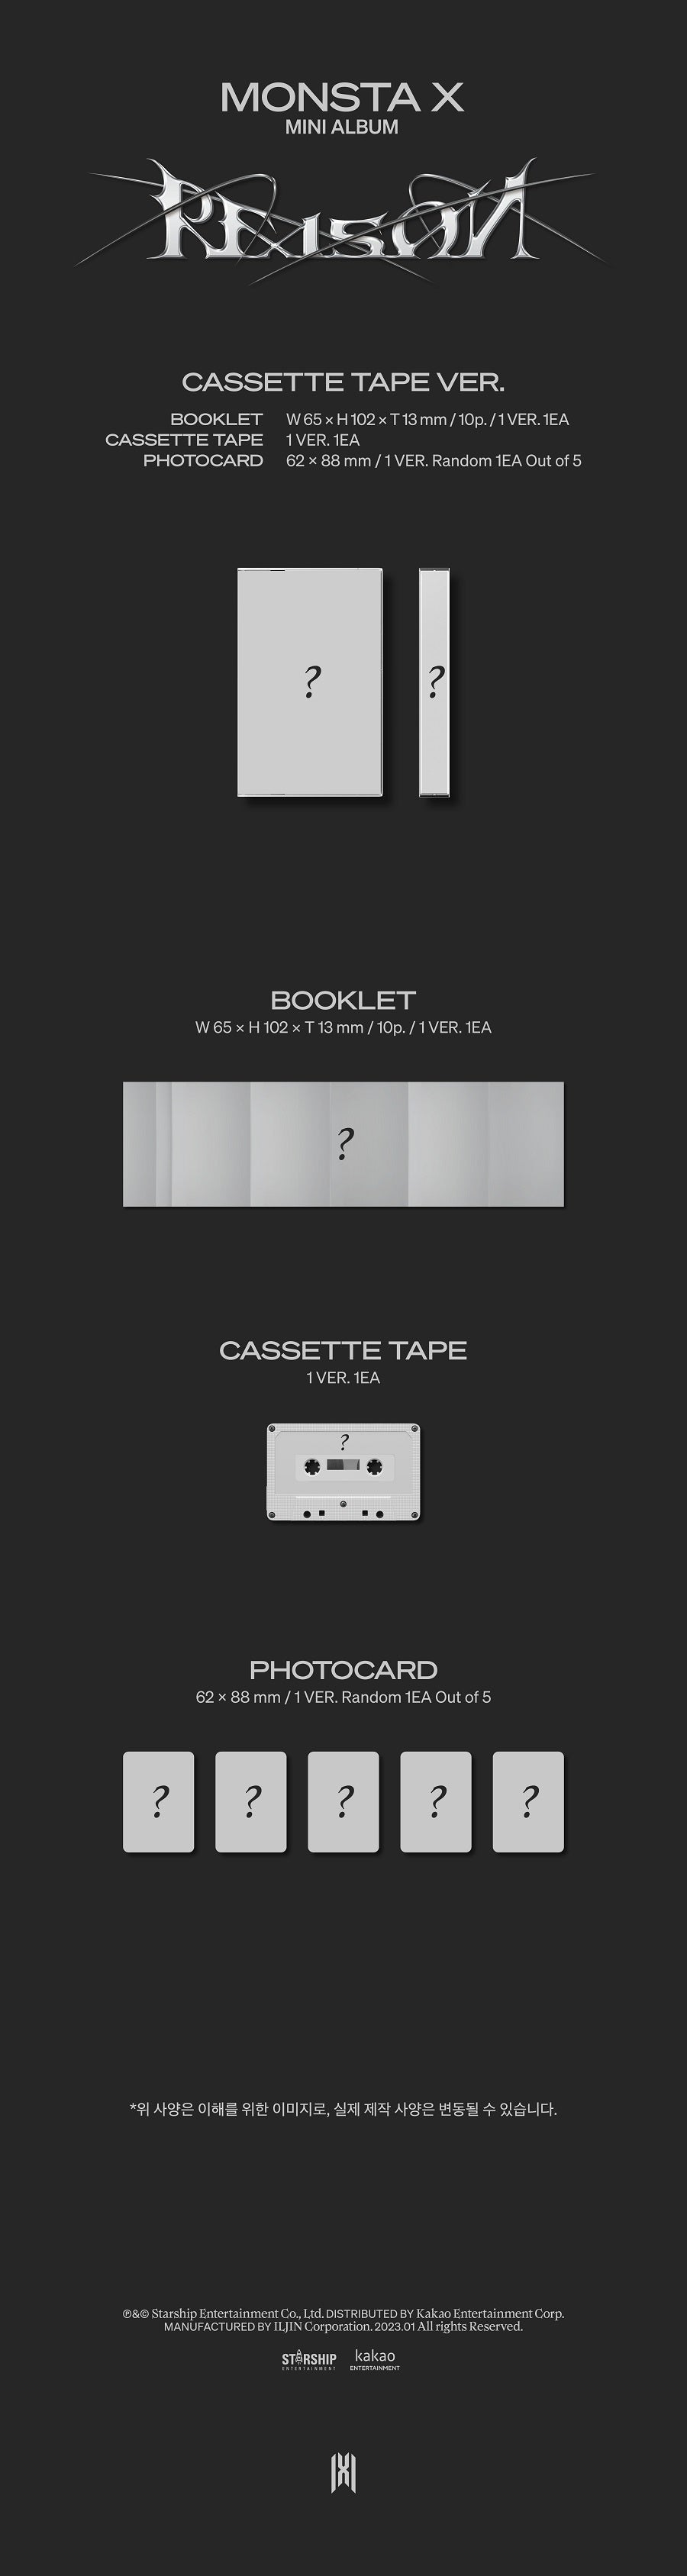 Monsta X Mini Album Vol. 12 - REASON (Cassette Tape Ver.)